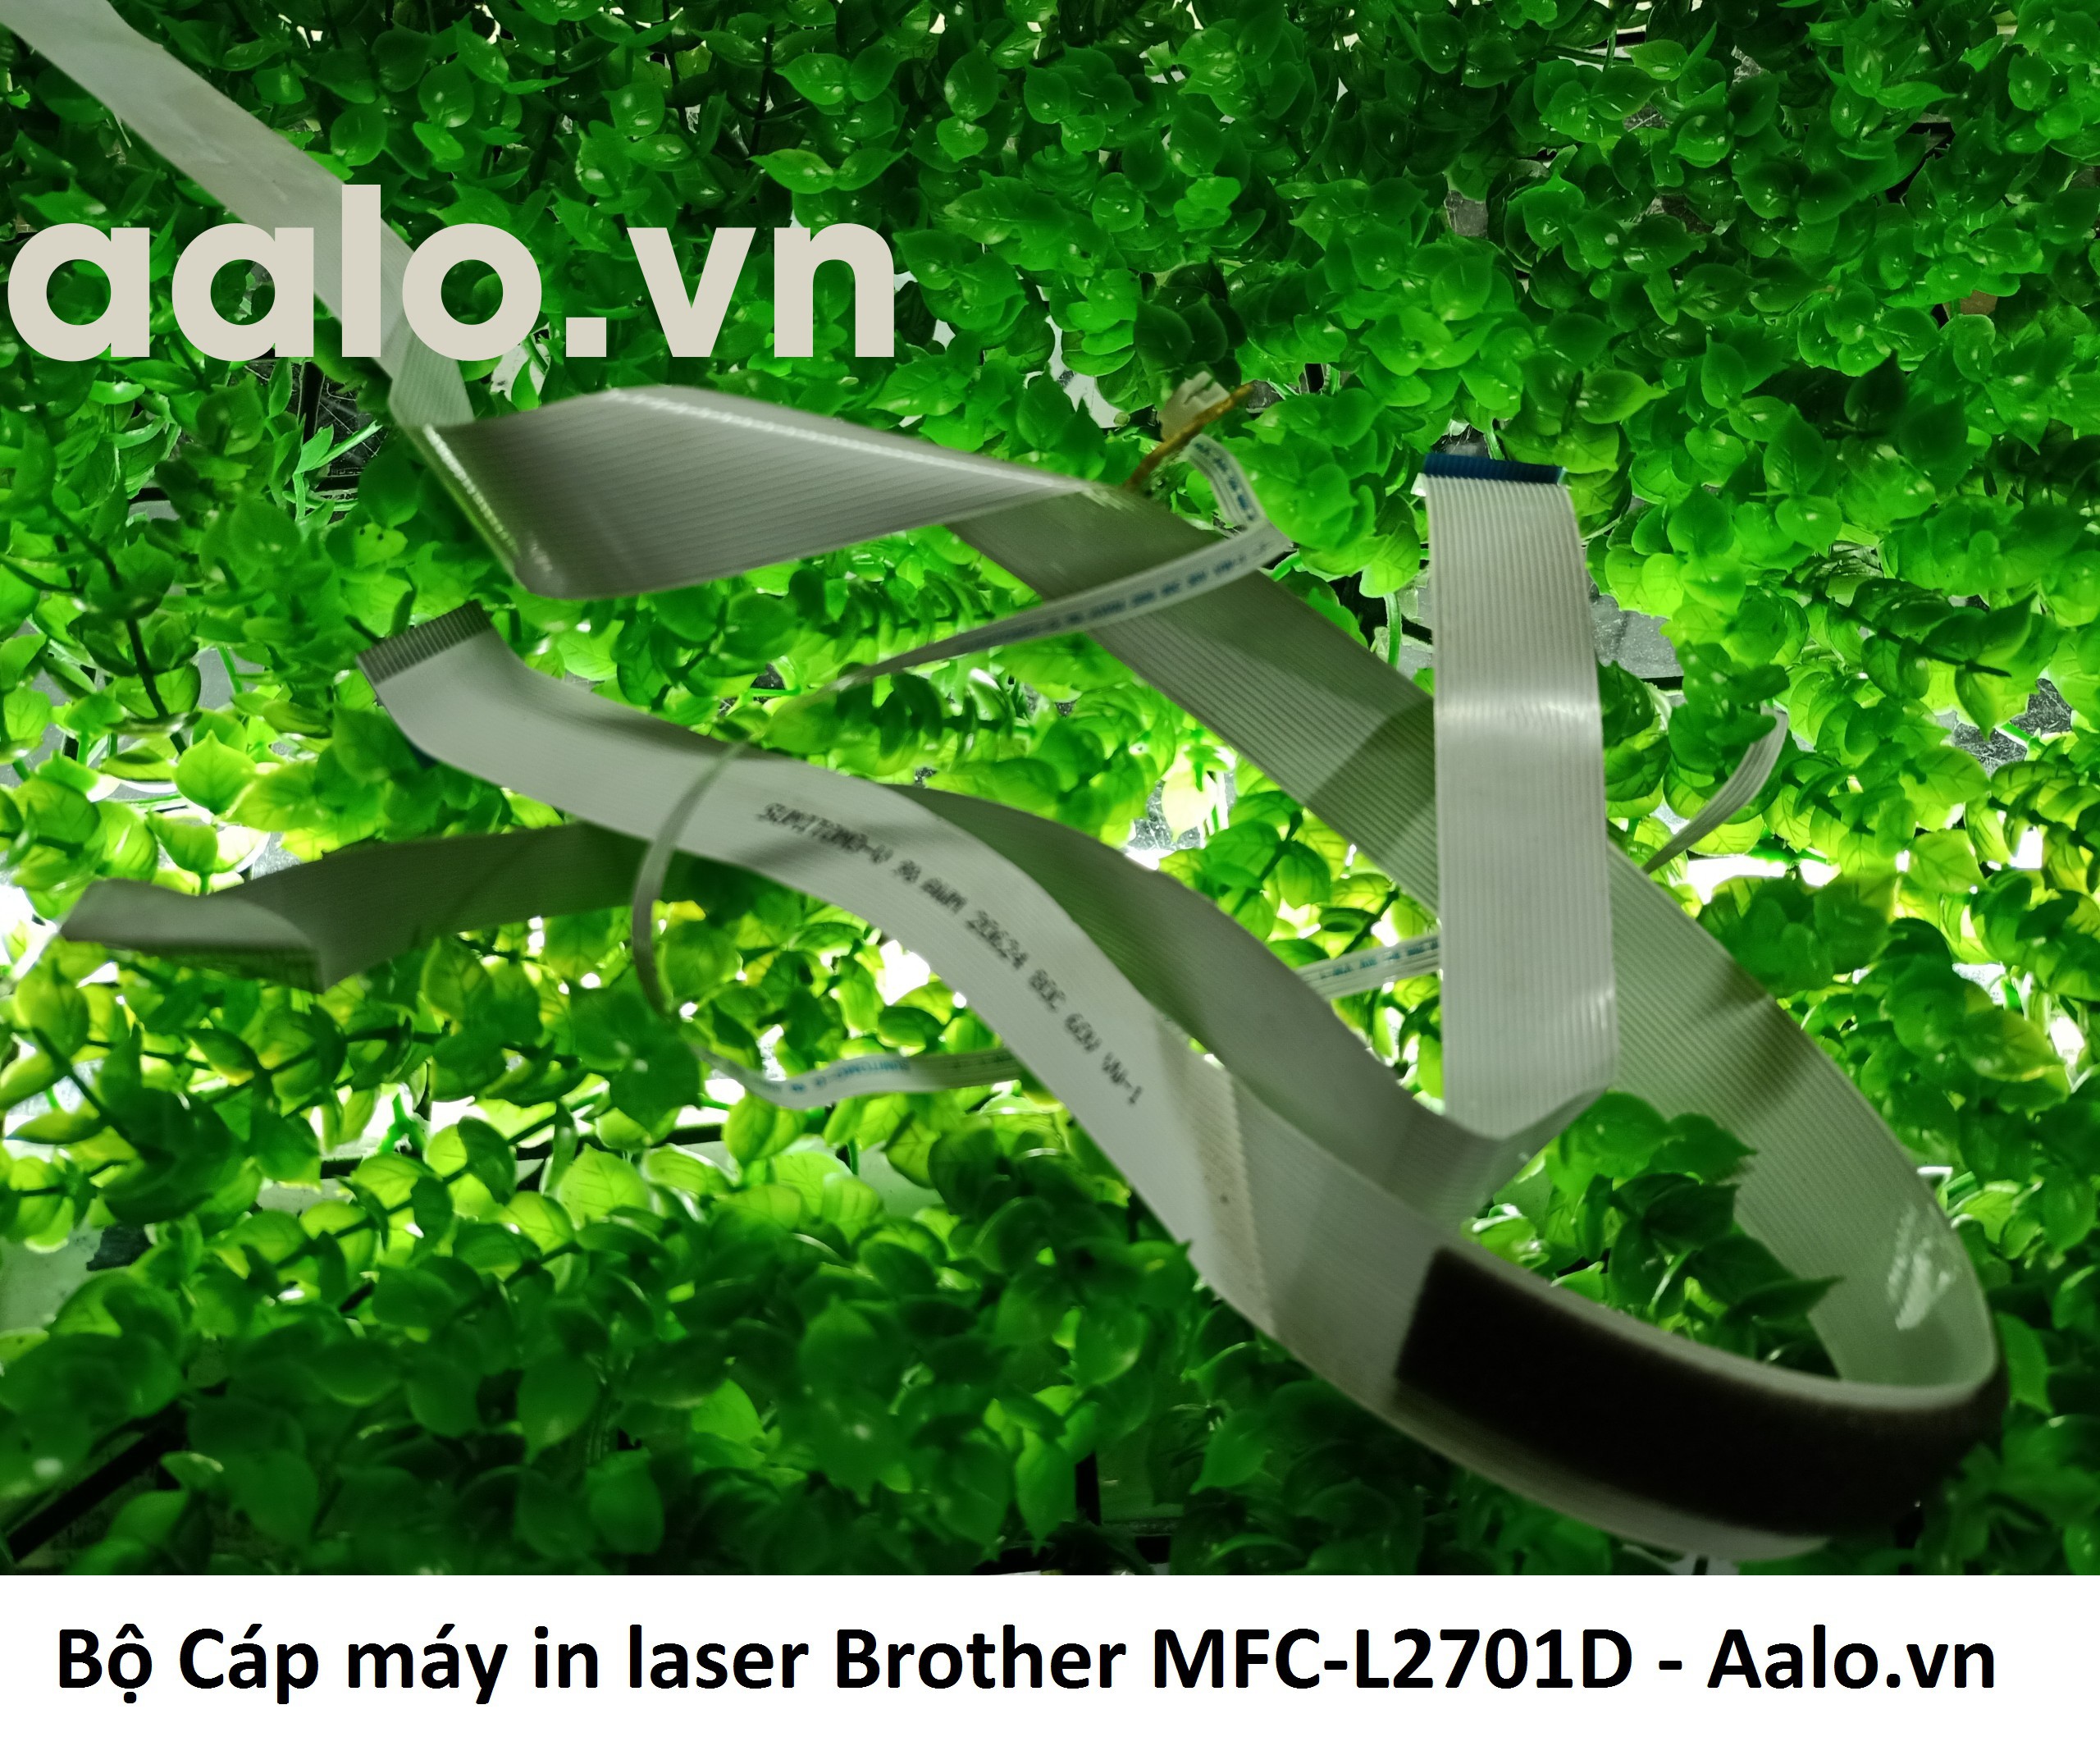 Bộ Cáp máy in laser Brother MFC-L2701D